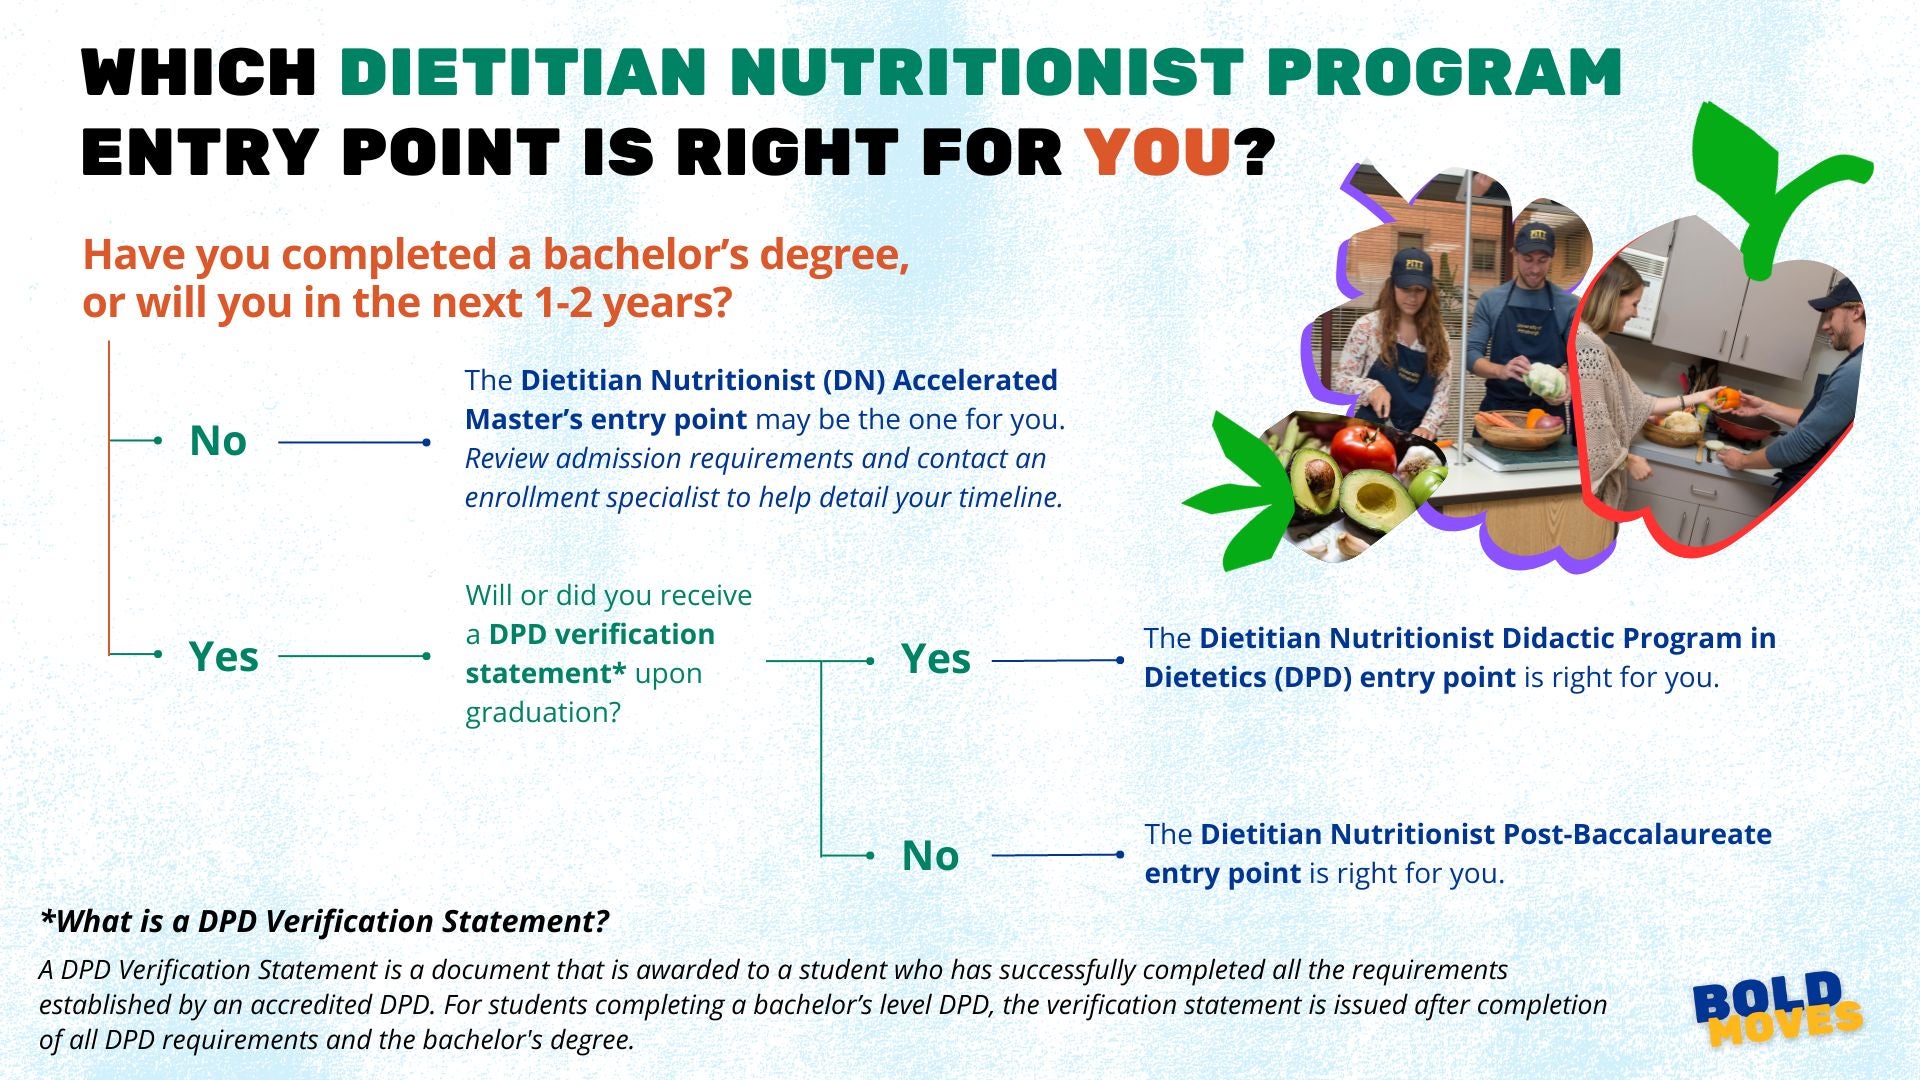 Pitt Titian Nutritionist Program